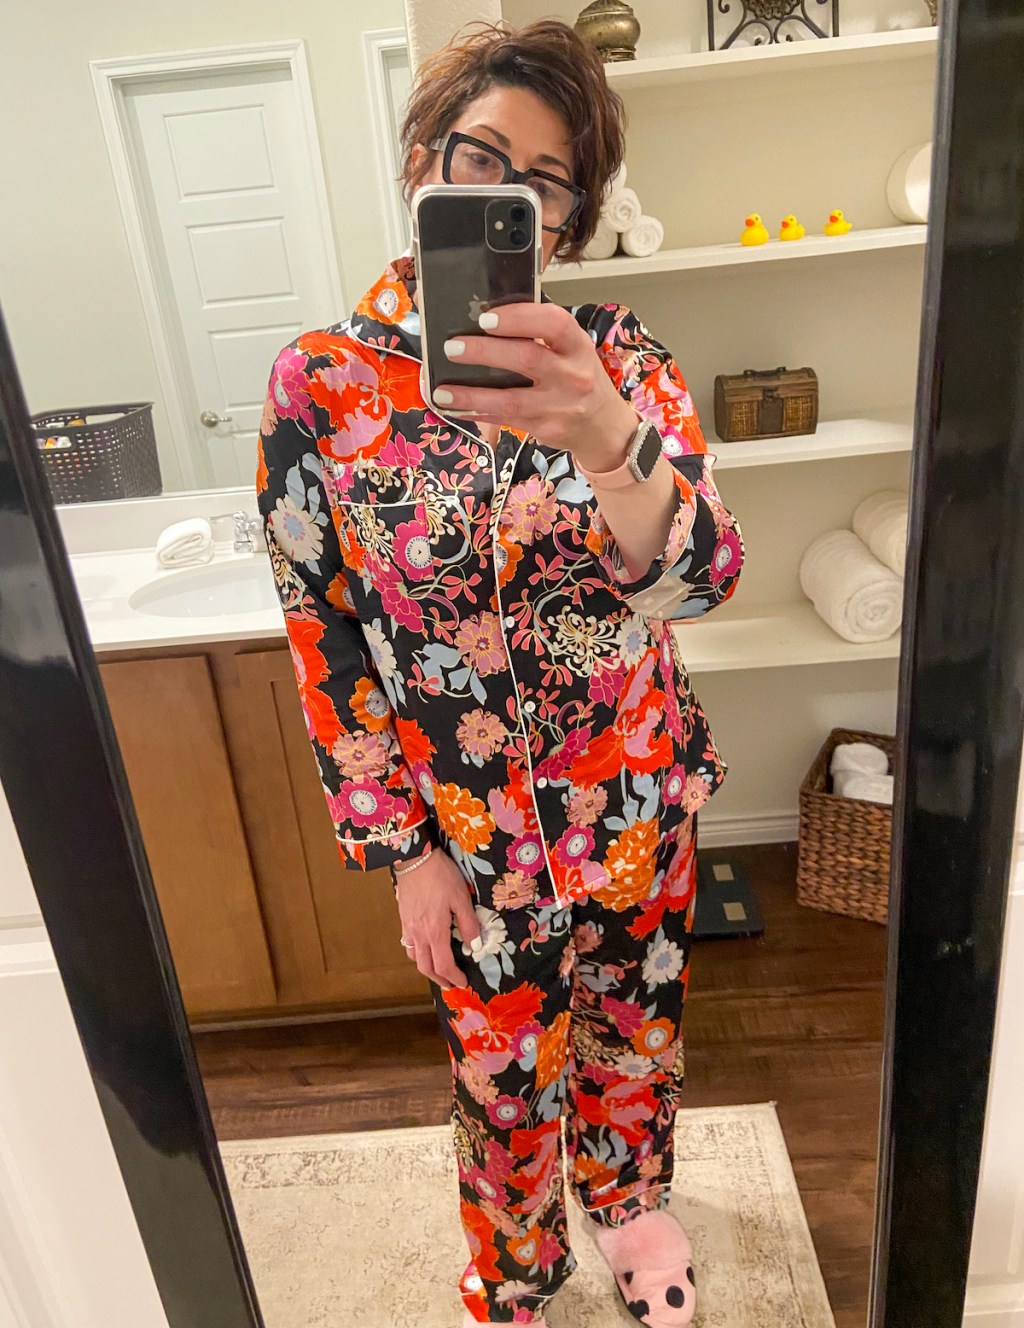 woman taking selfie in mirror wearing printed pajamas